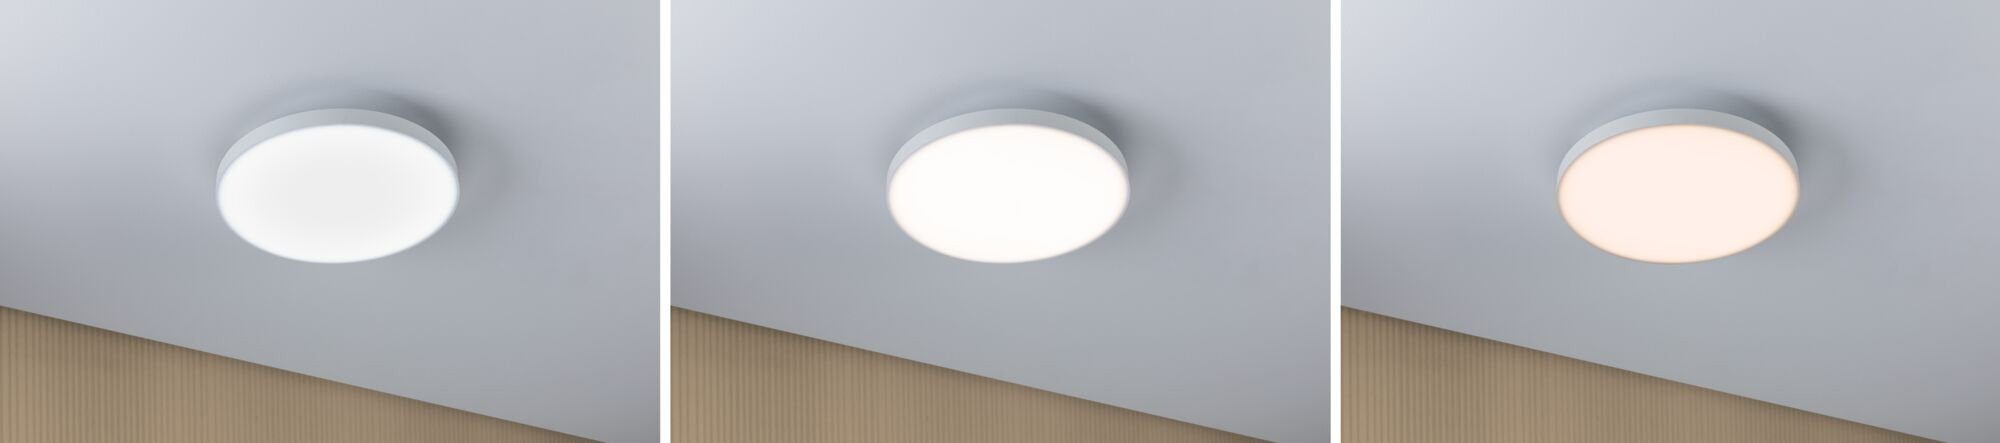 Tageslichtweiß Paulmann integriert, Panel LED Velora, LED fest